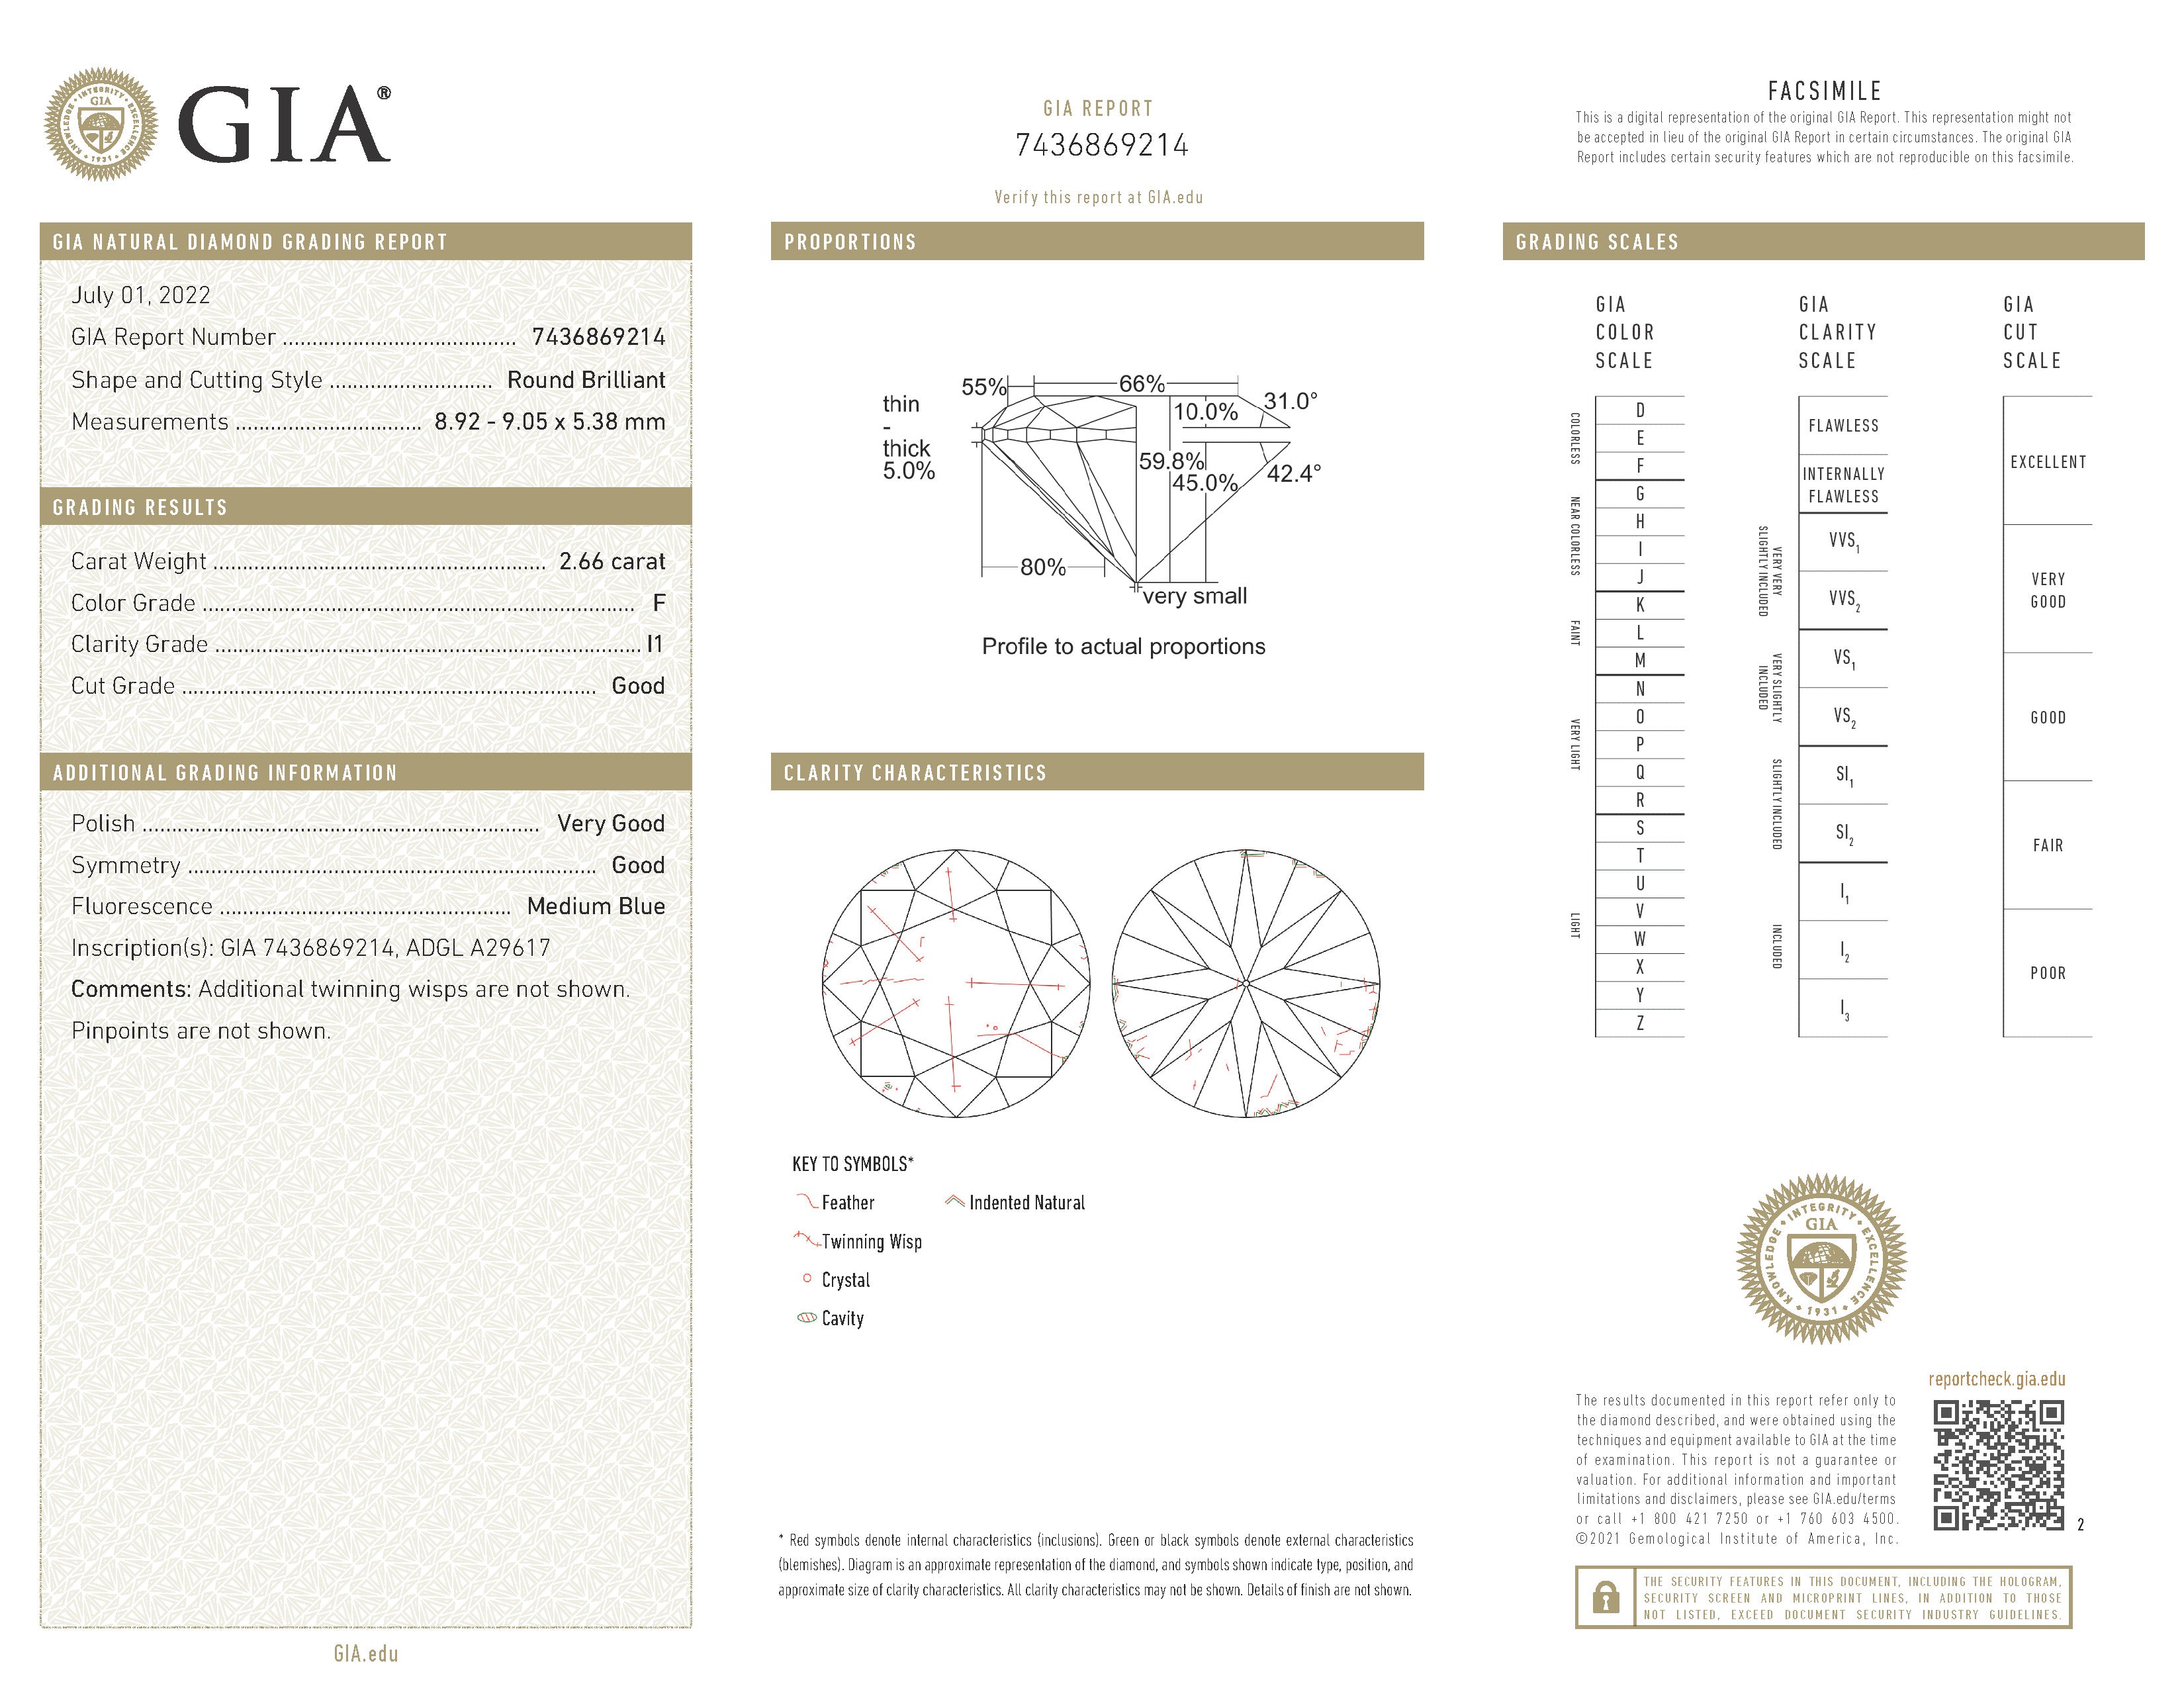 Adira 2.66ct GIA Certified Diamond Platinum Ring* OB Rings Imperial Jewellery 